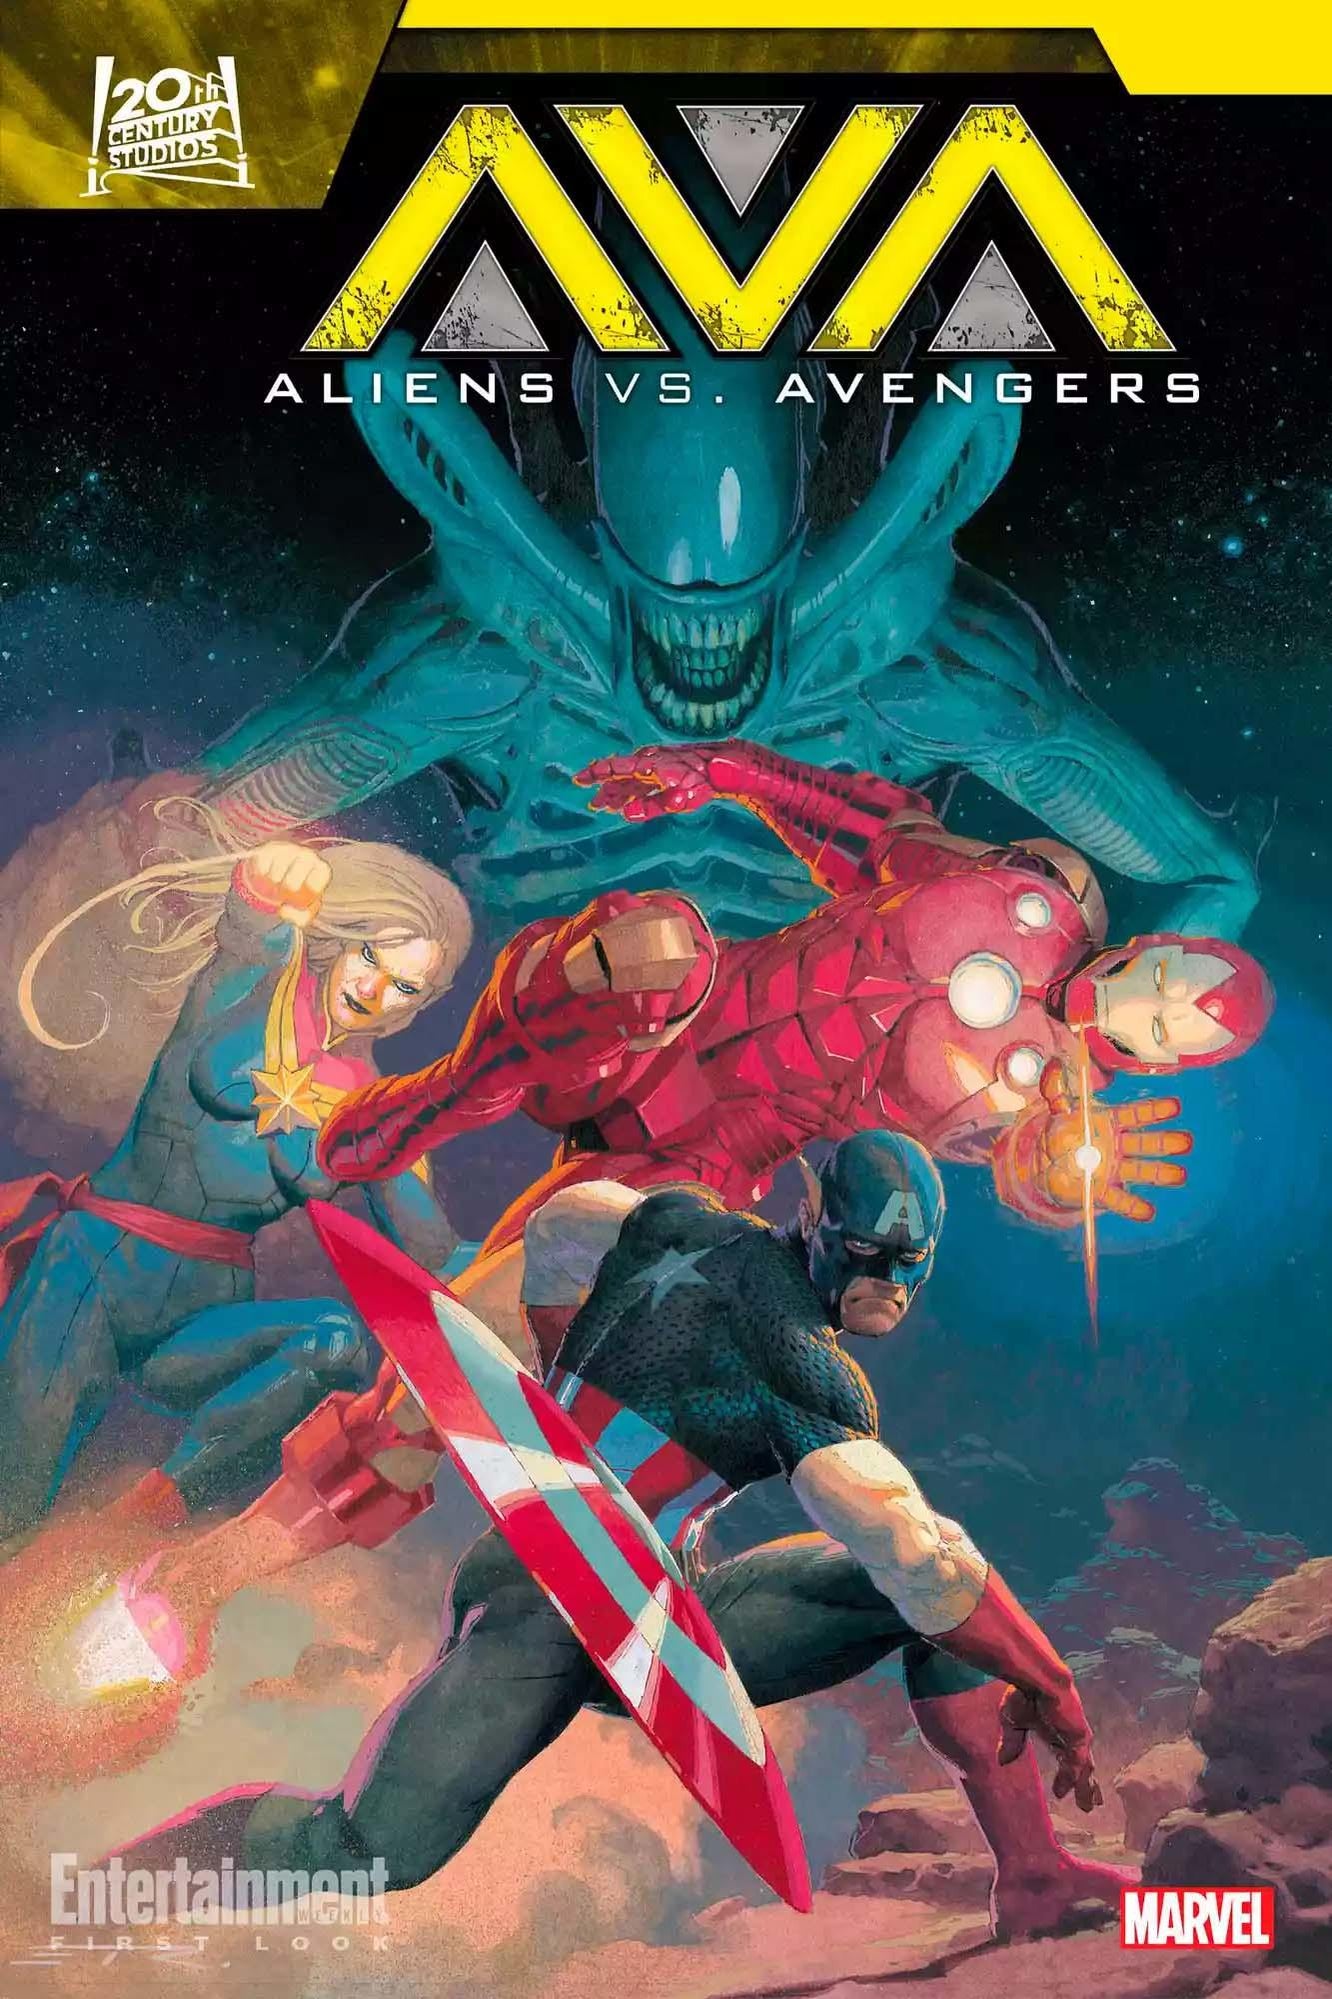 Marvel Announces Aliens vs. Avengers by Jonathan Hickman and Esad Ribic